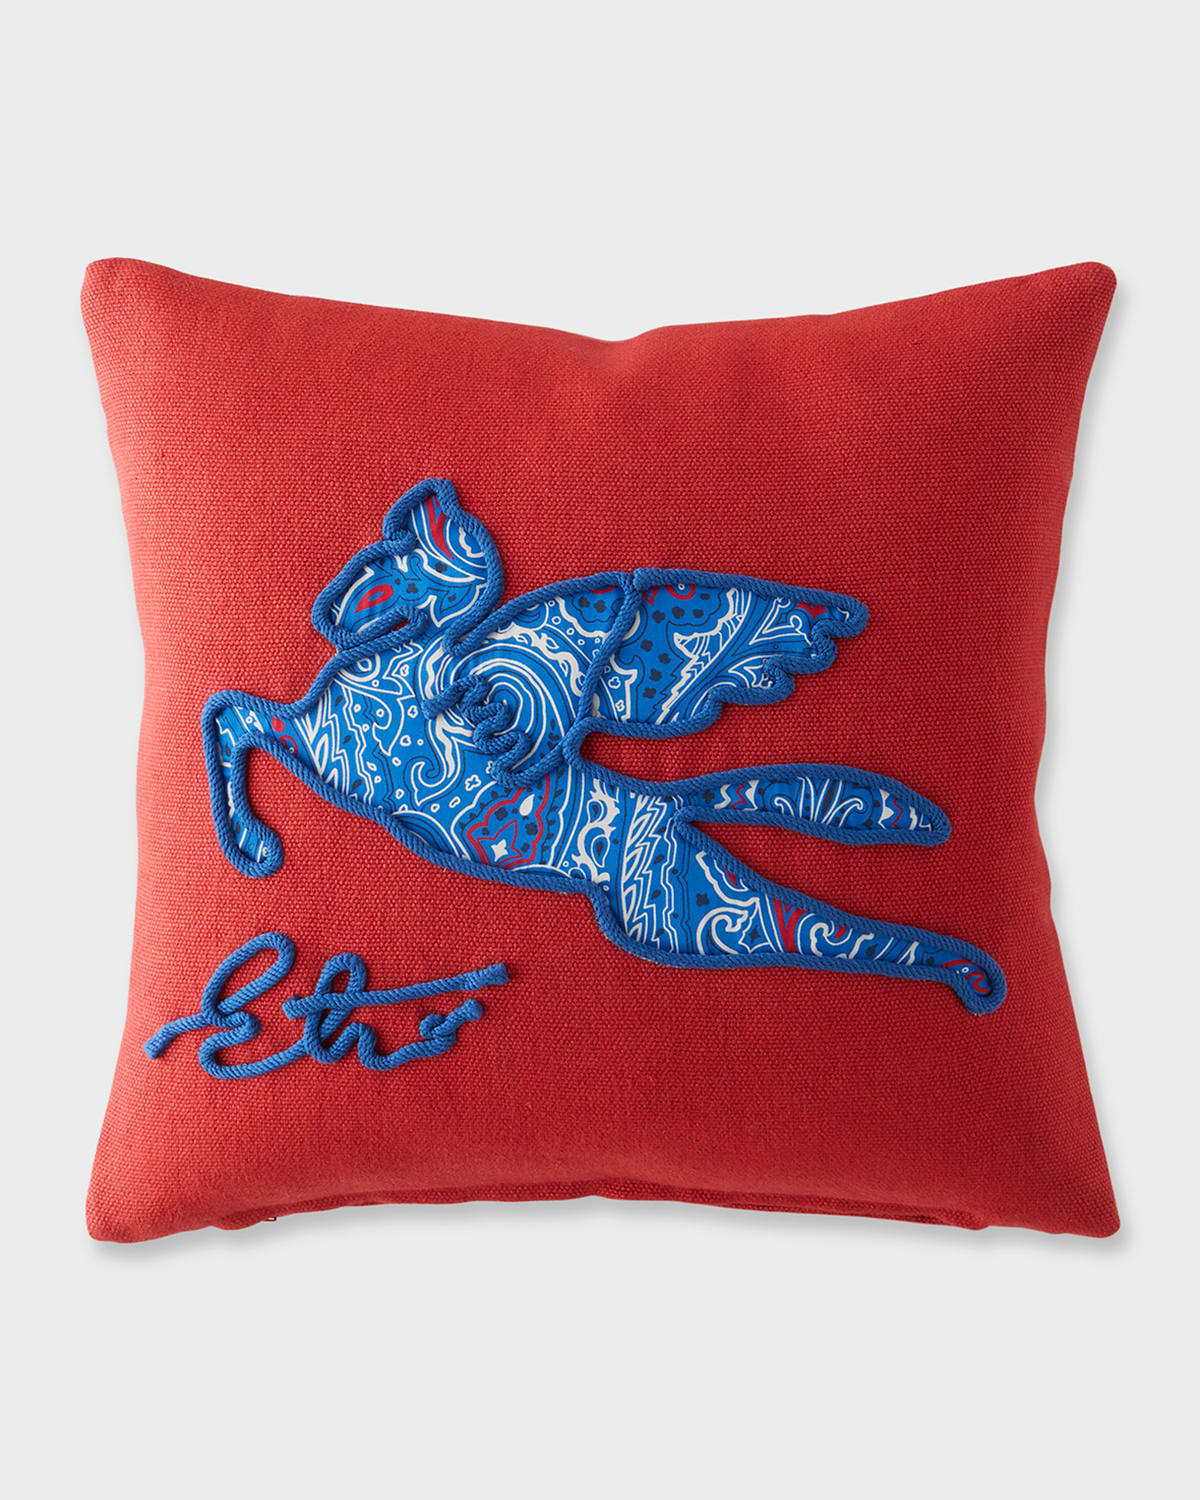 Etro Delhi Embroidered Pillow, 18" Square In Red